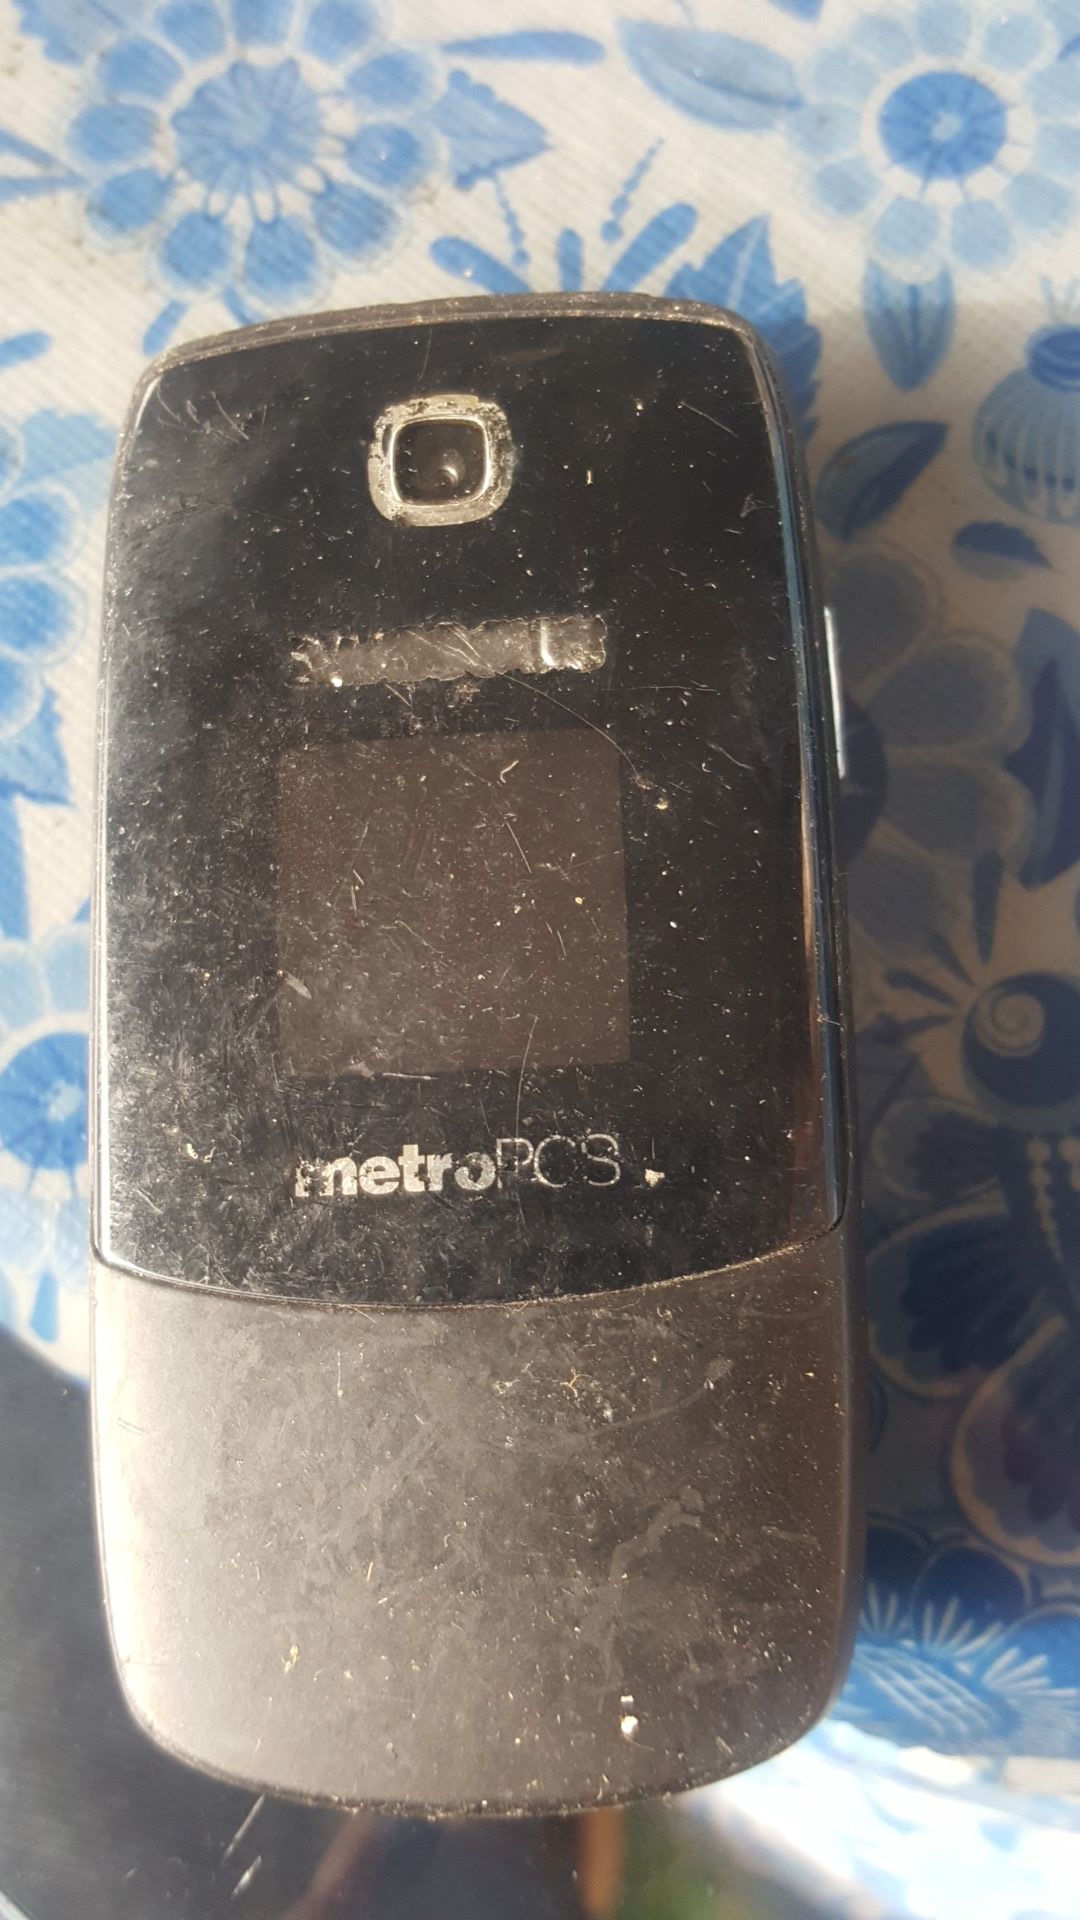 Metro PCS flip phone $5